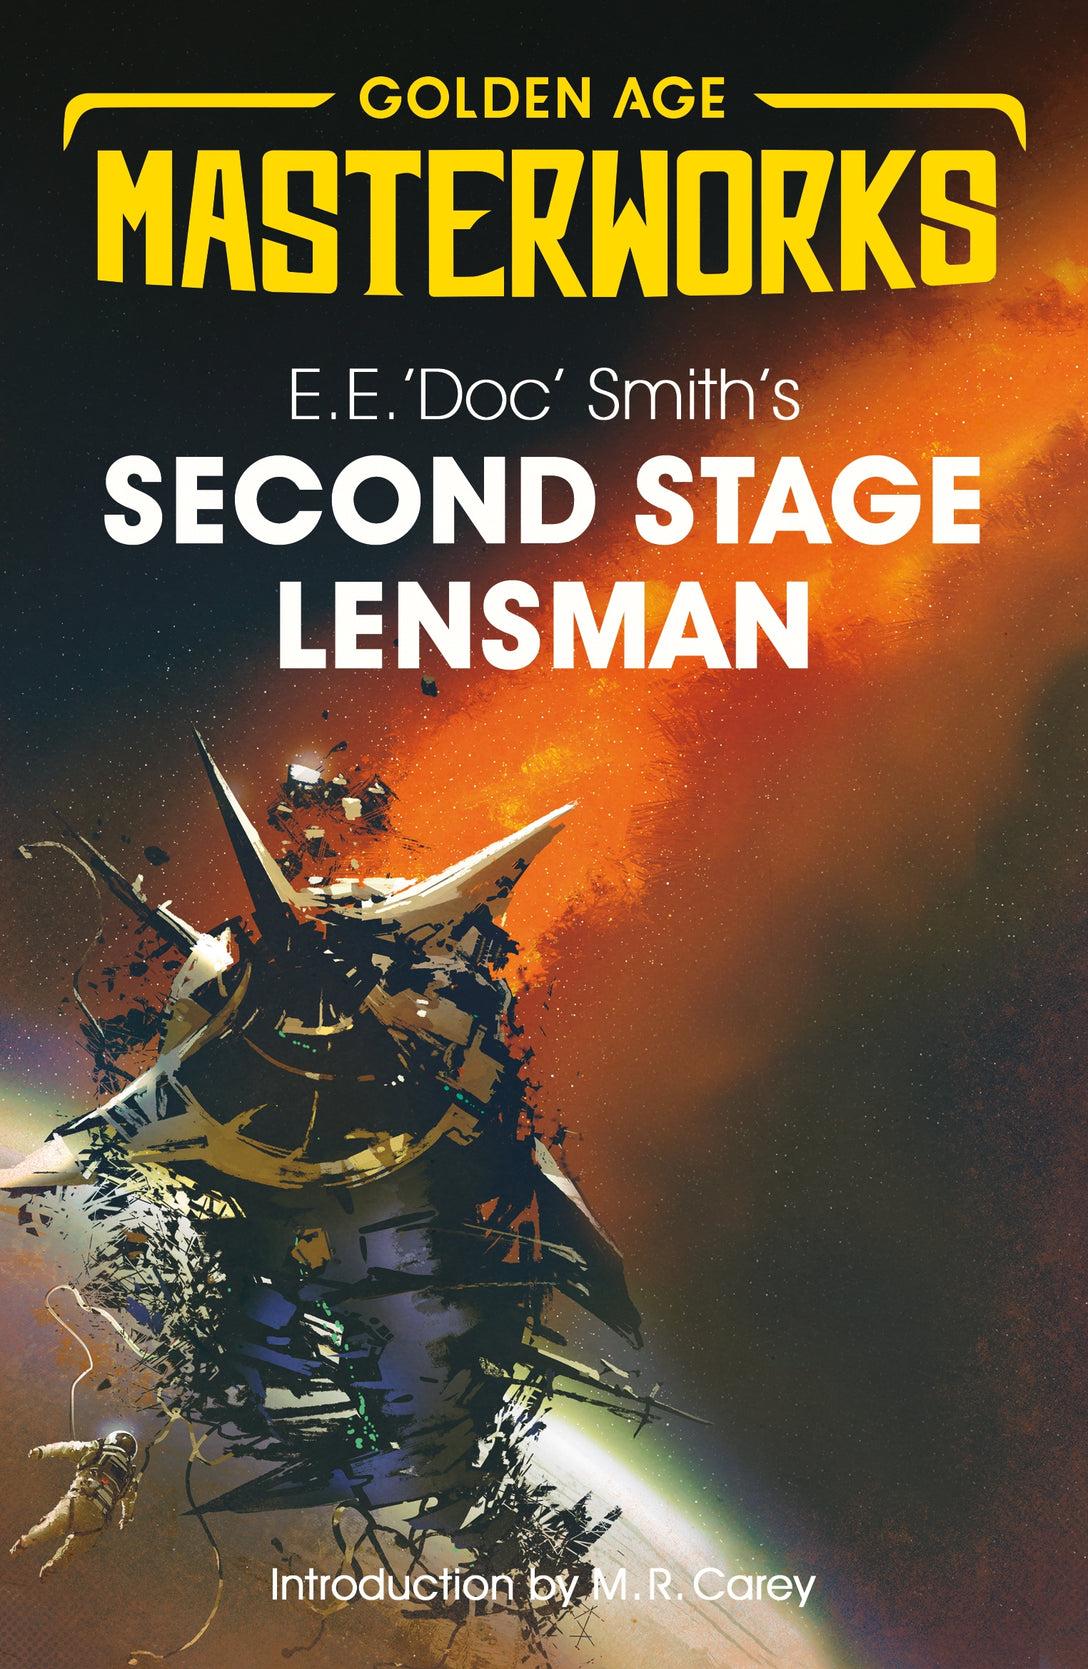 Second Stage Lensmen by E.E. 'Doc' Smith